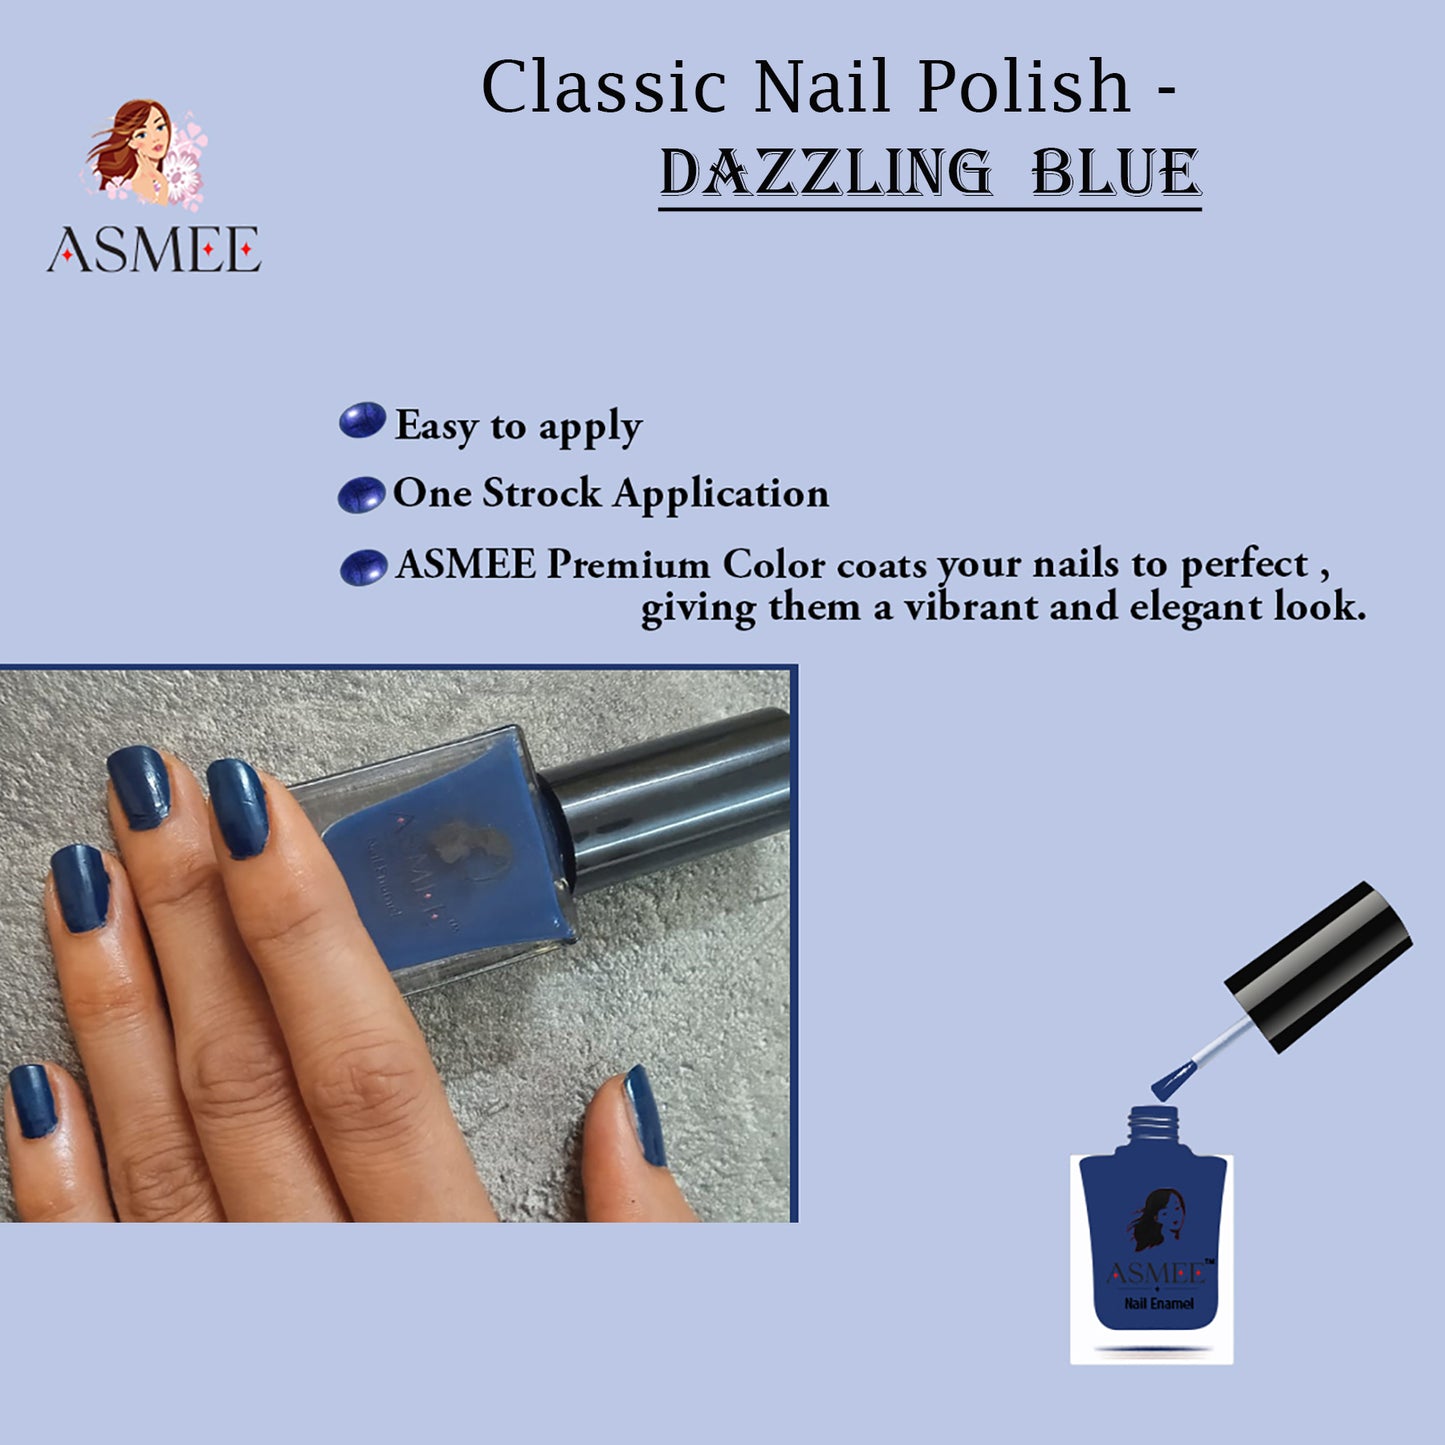 Asmee Classic Nail Polish - Dazzling Blue